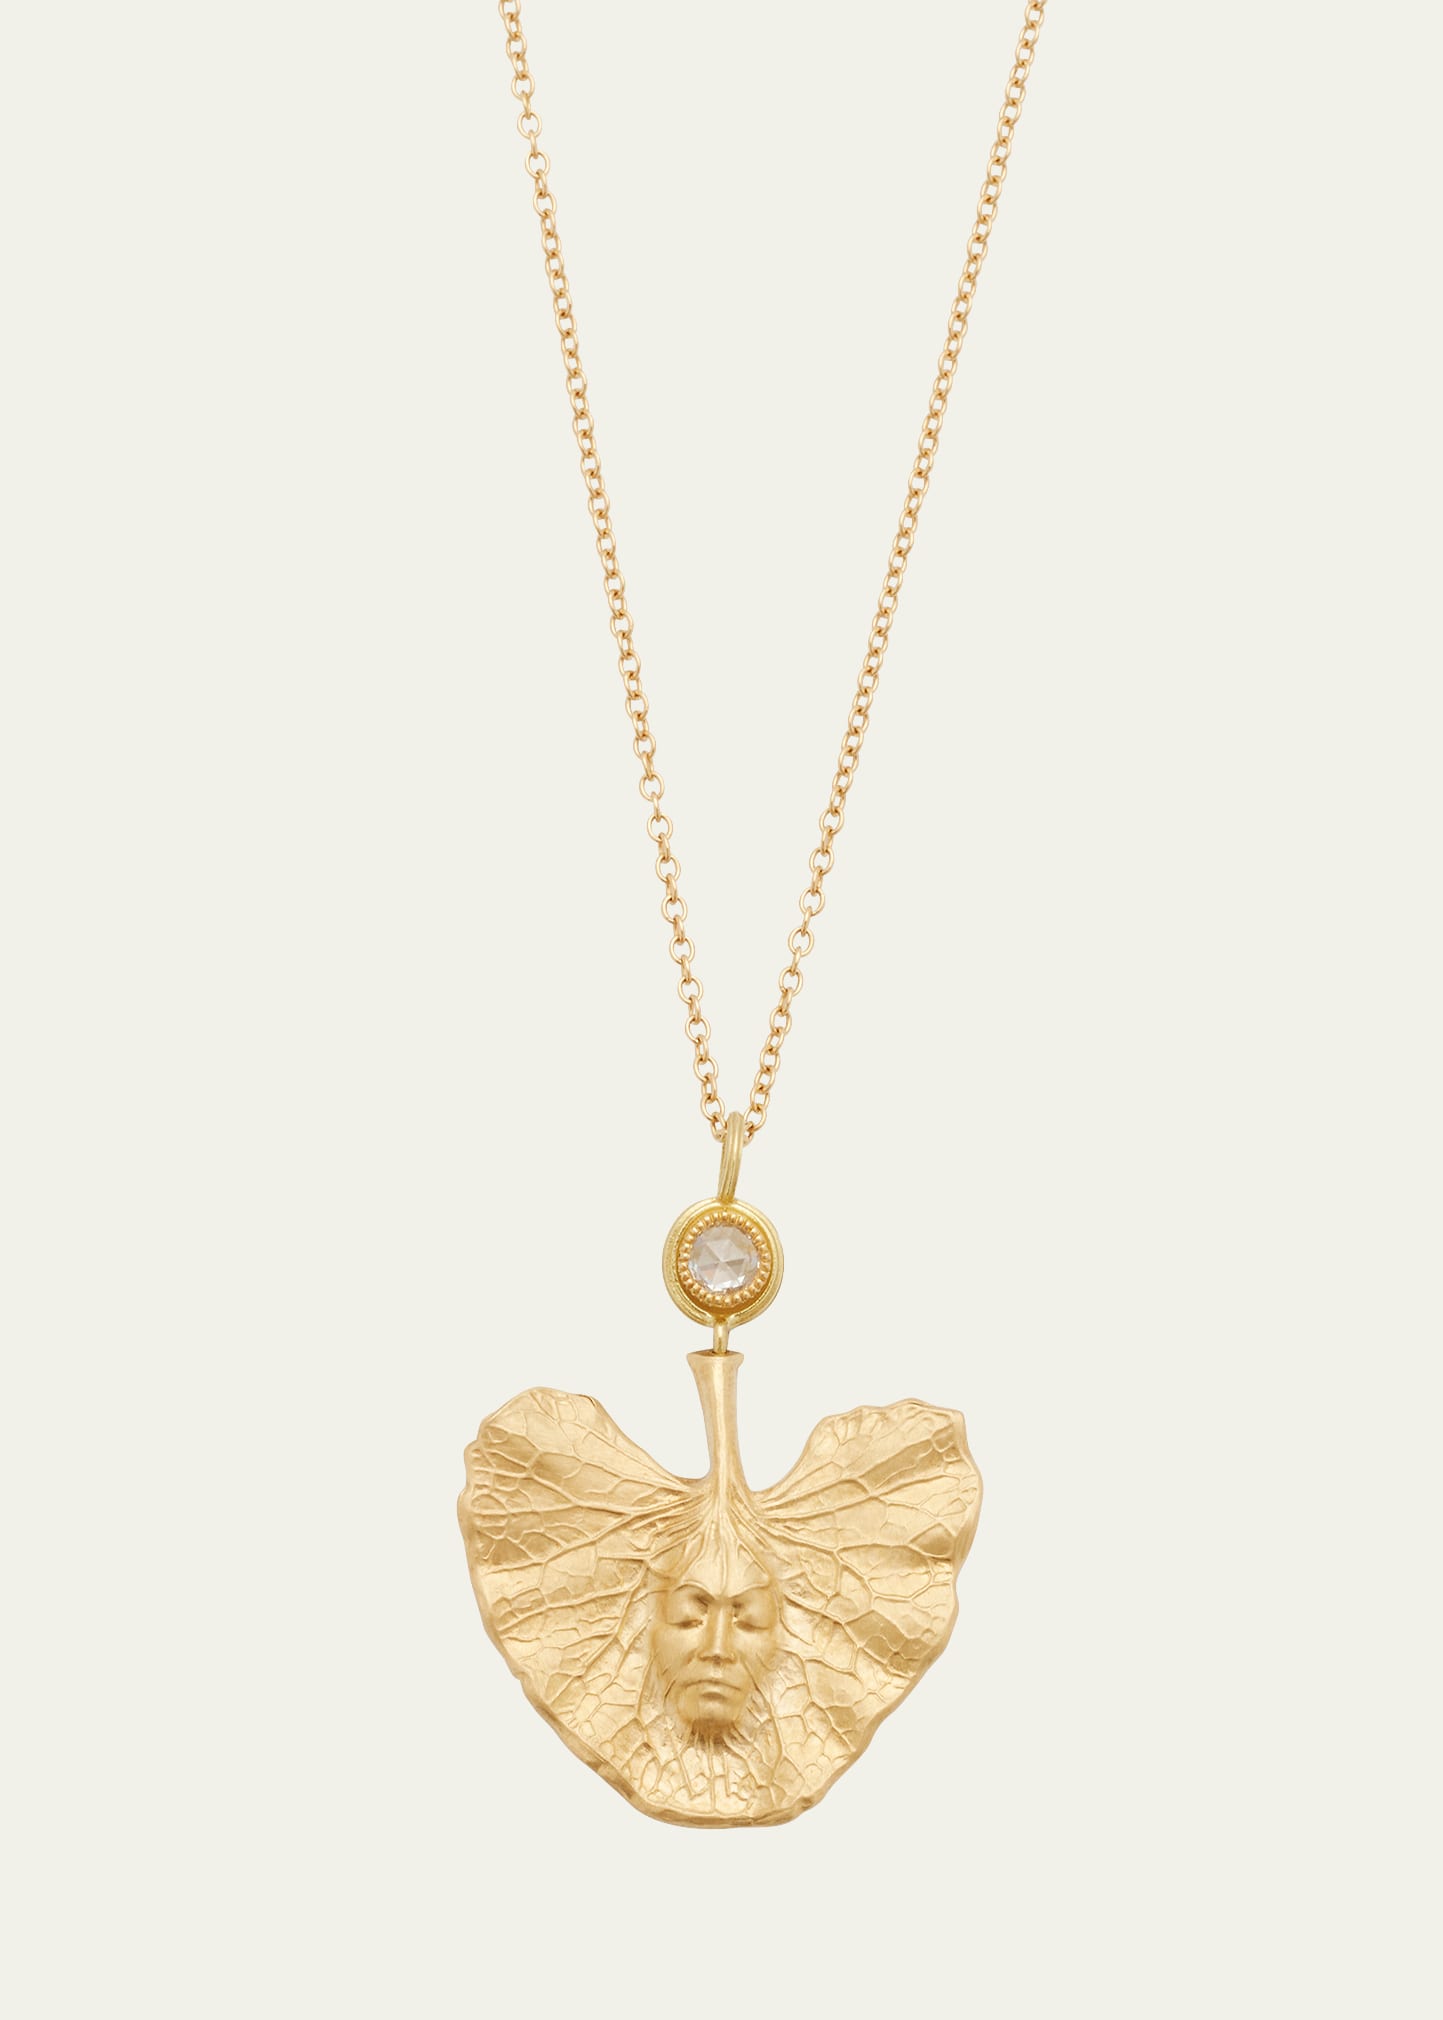 Anthony Lent Shoko Leaf Pendant in 18k Gold with Rose-Cut Diamond